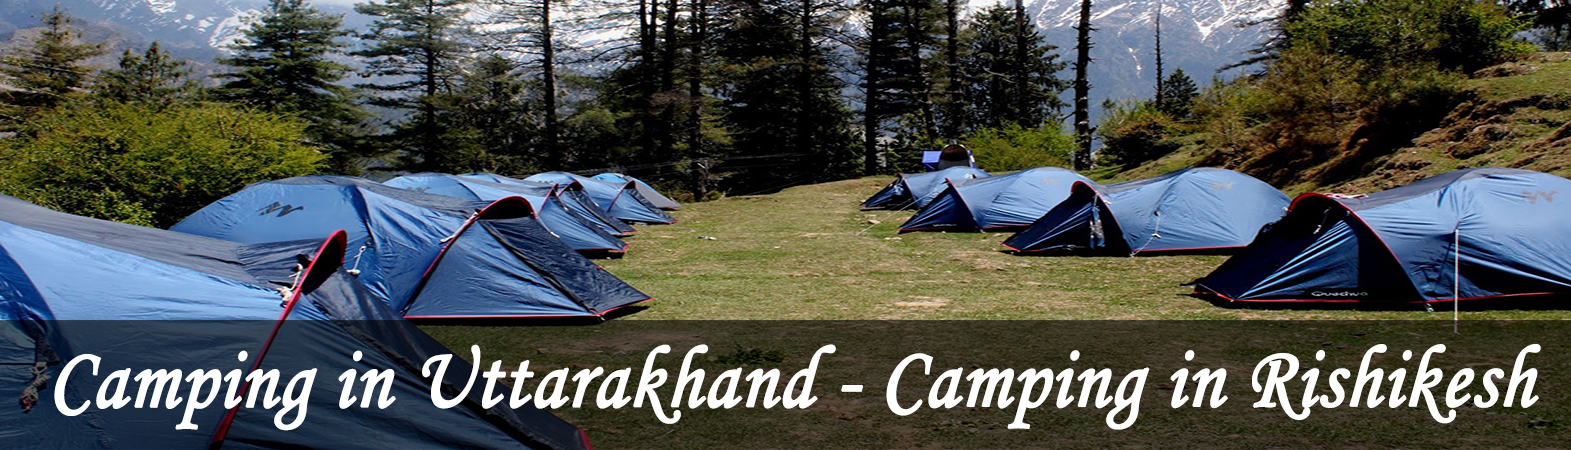 Camping in Uttarakhand, Camping in Rishikesh